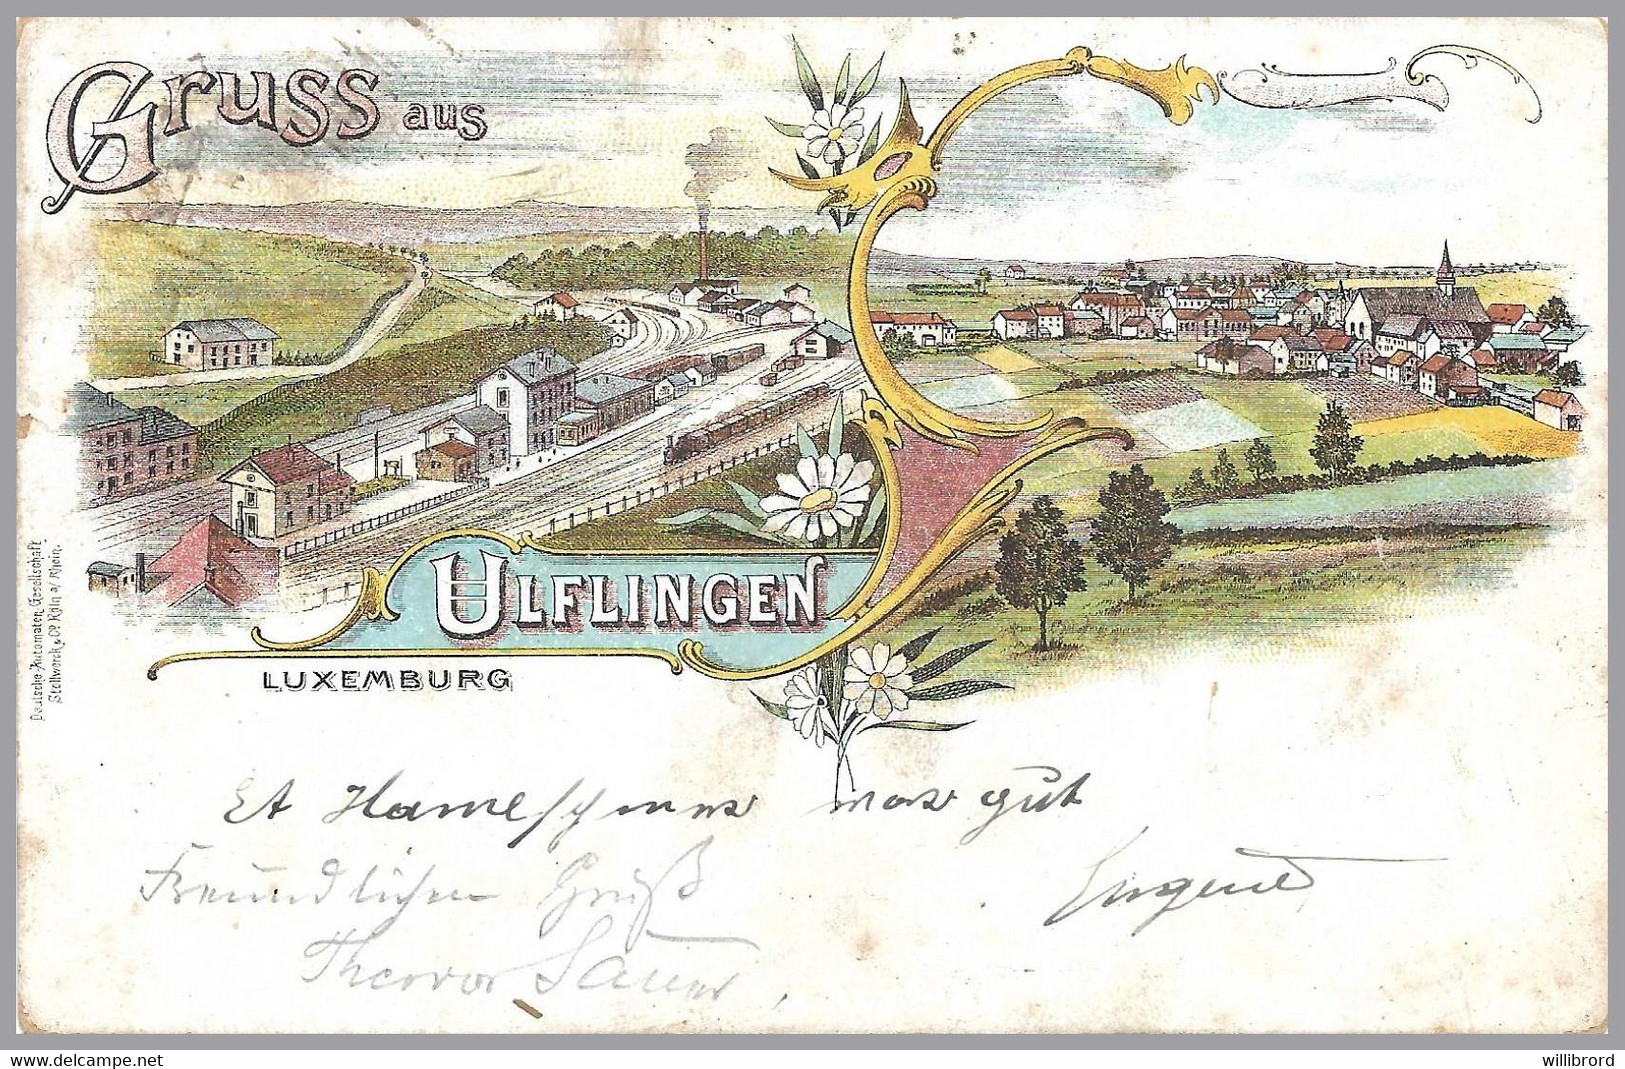 LUXEMBOURG - 1899 GRUSS AUS ULFLINGEN - RPO Ulflingen-Luxemburg Cancel - Used To MERSCH - Undivided Back - 1895 Adolfo Di Profilo